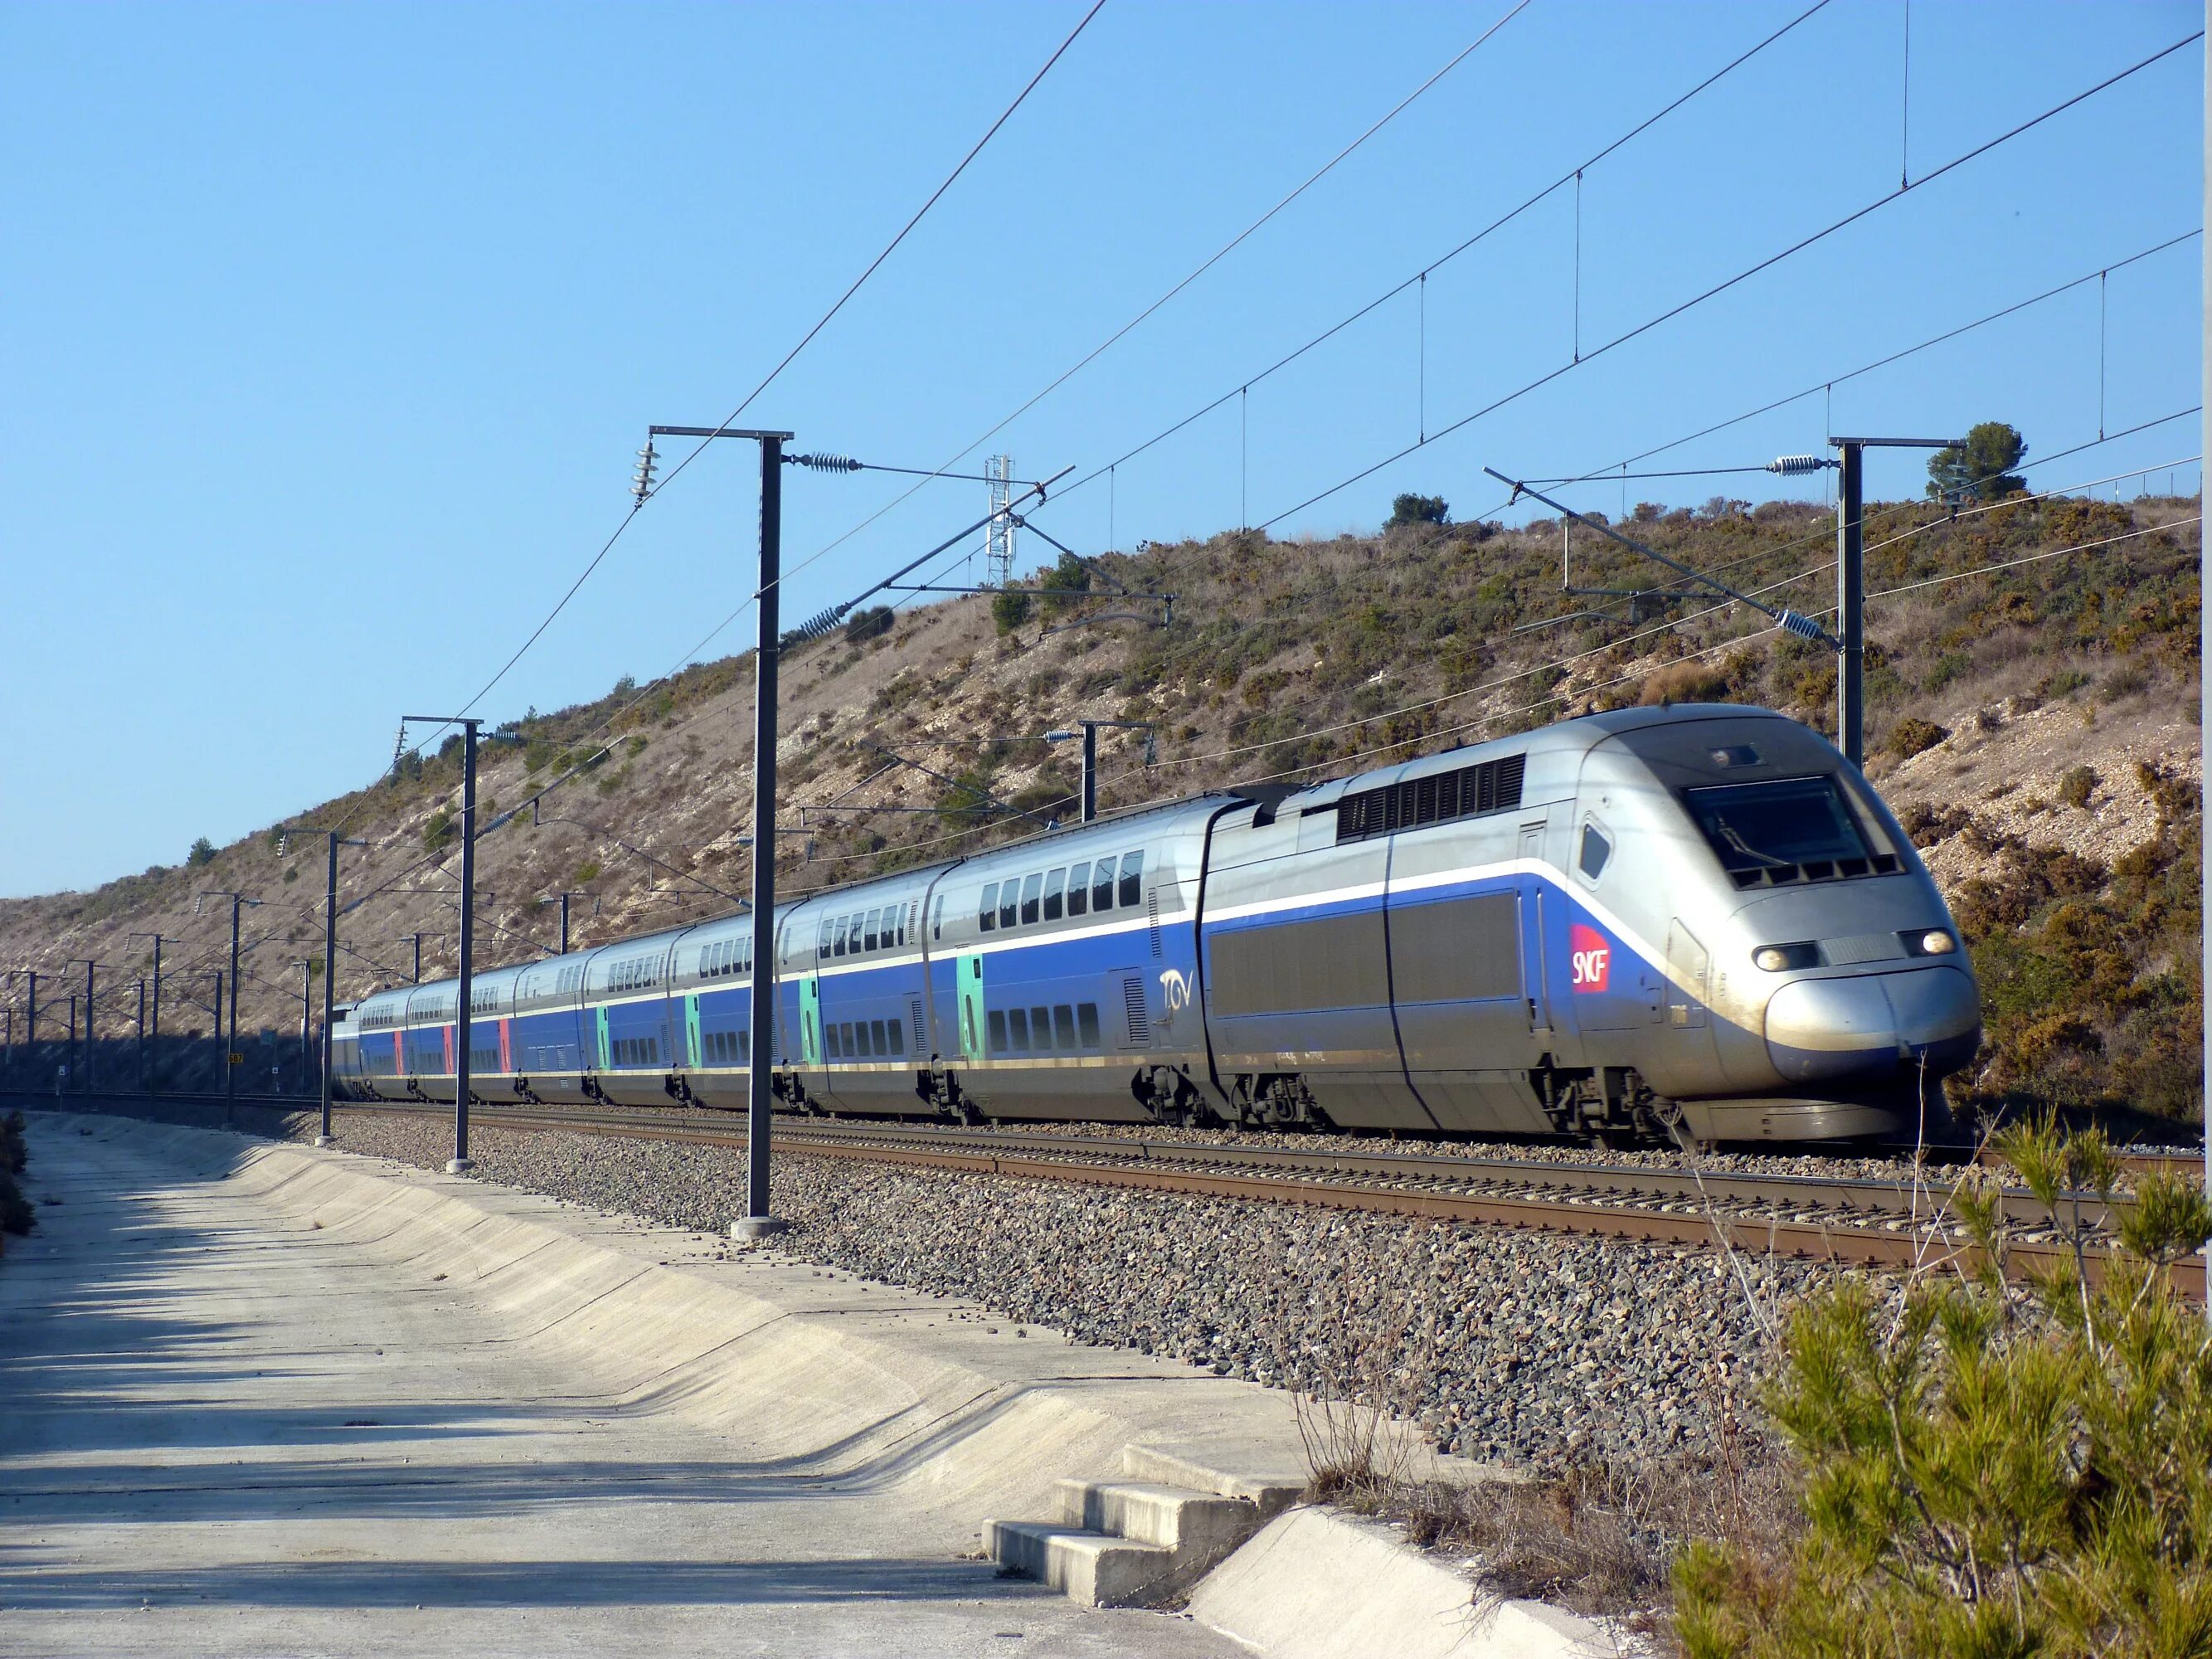 French train. Поезд ТЖВ Франция. Французский поезд TGV. SNCF Франция железная дорога. Скоростной поезд TGV Франция.